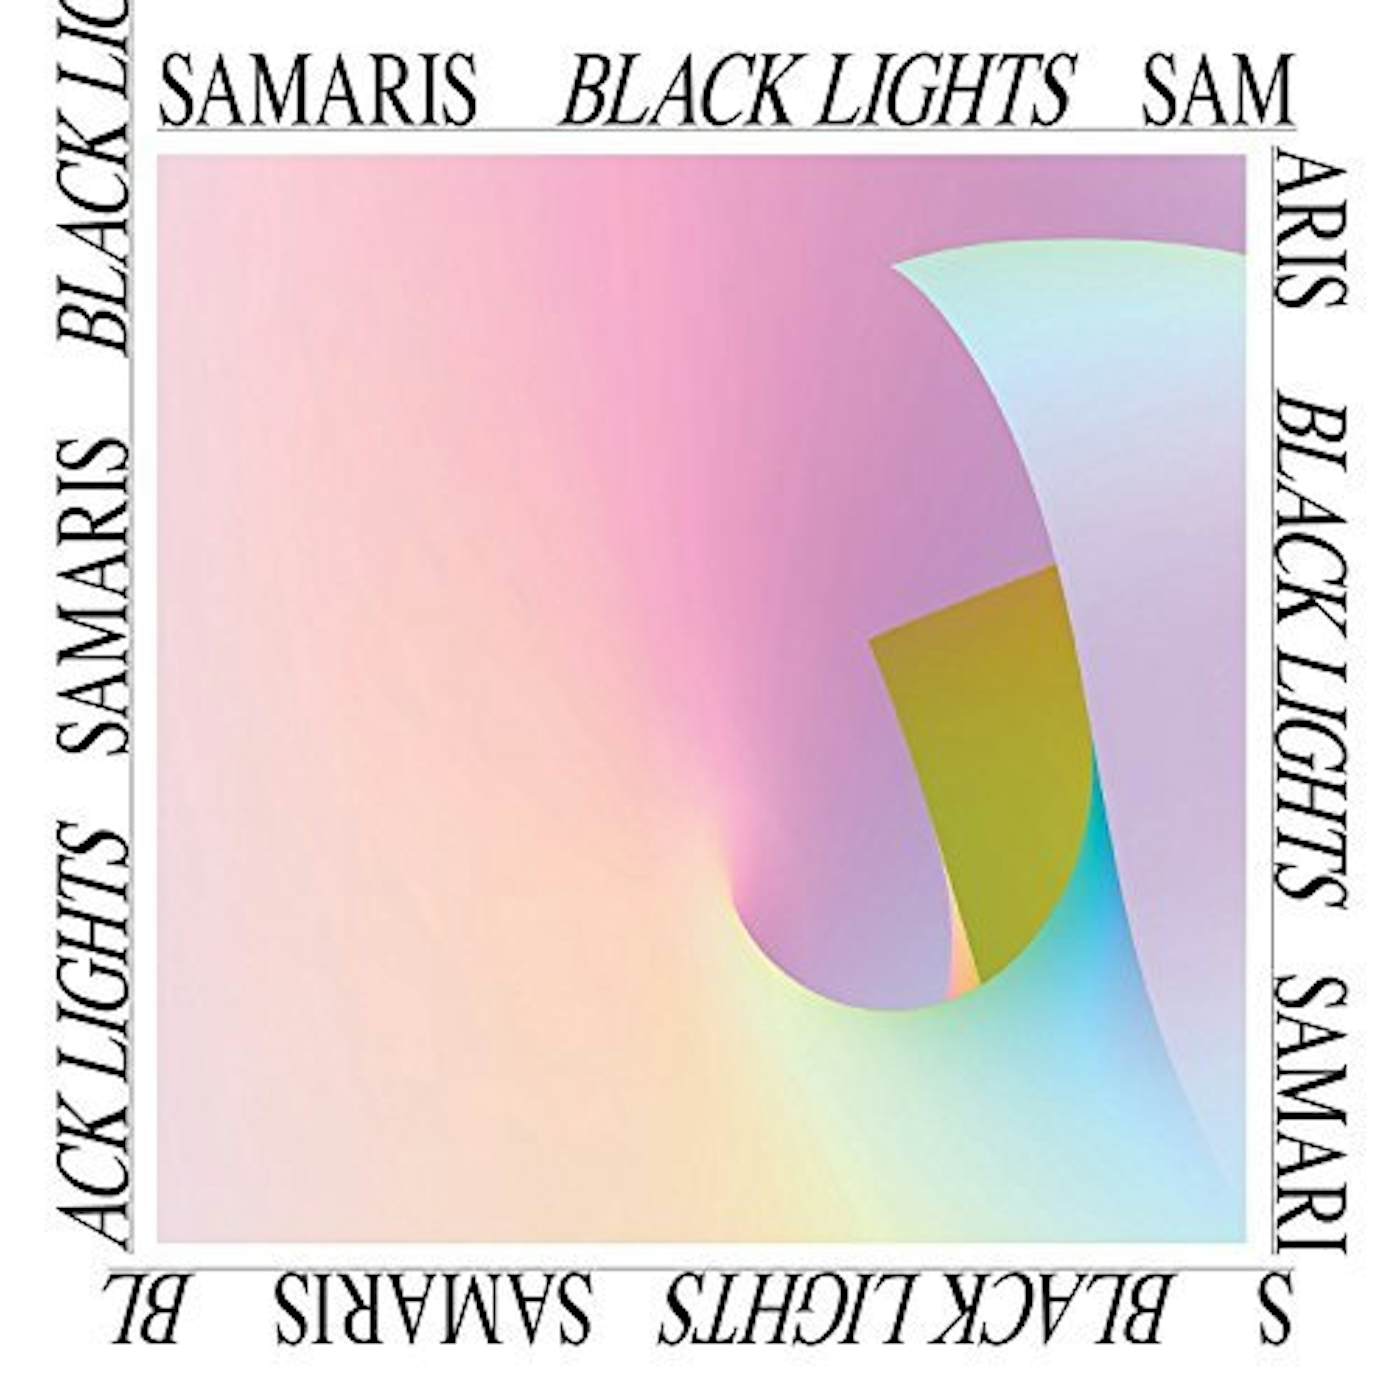 Samaris BLACK LIGHTS CD